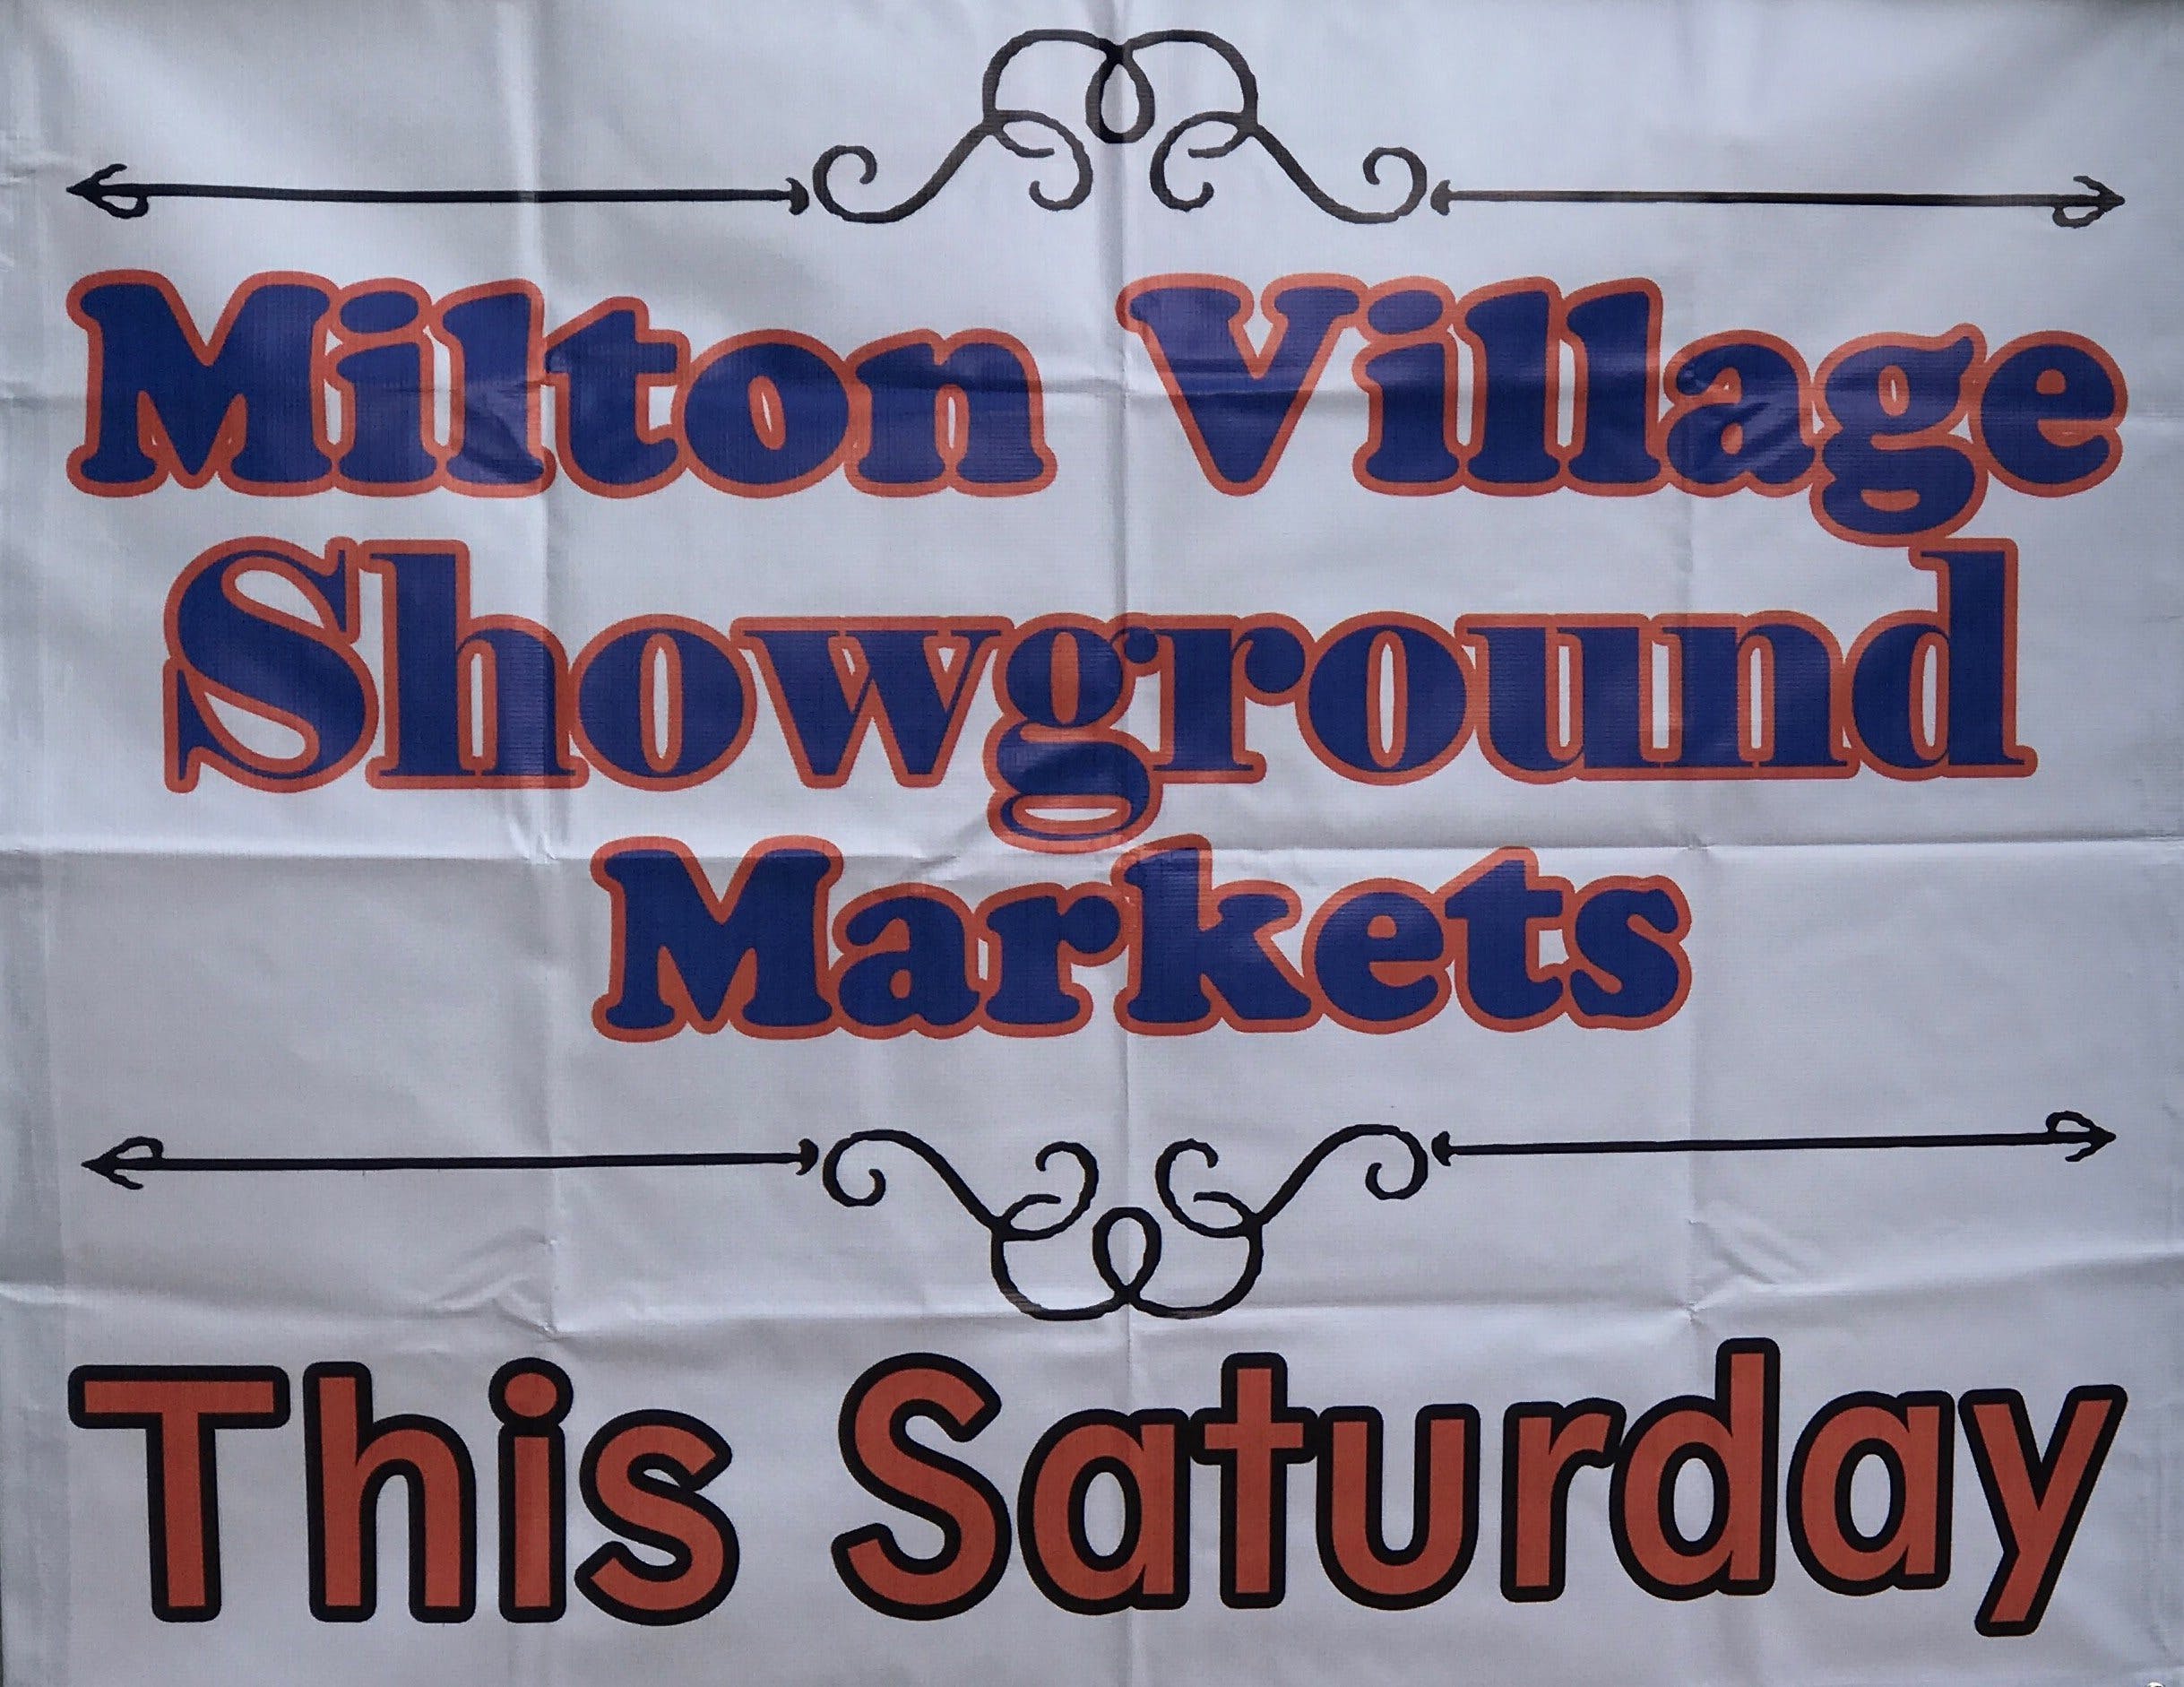 Milton Village Showground Markets - thumb 2